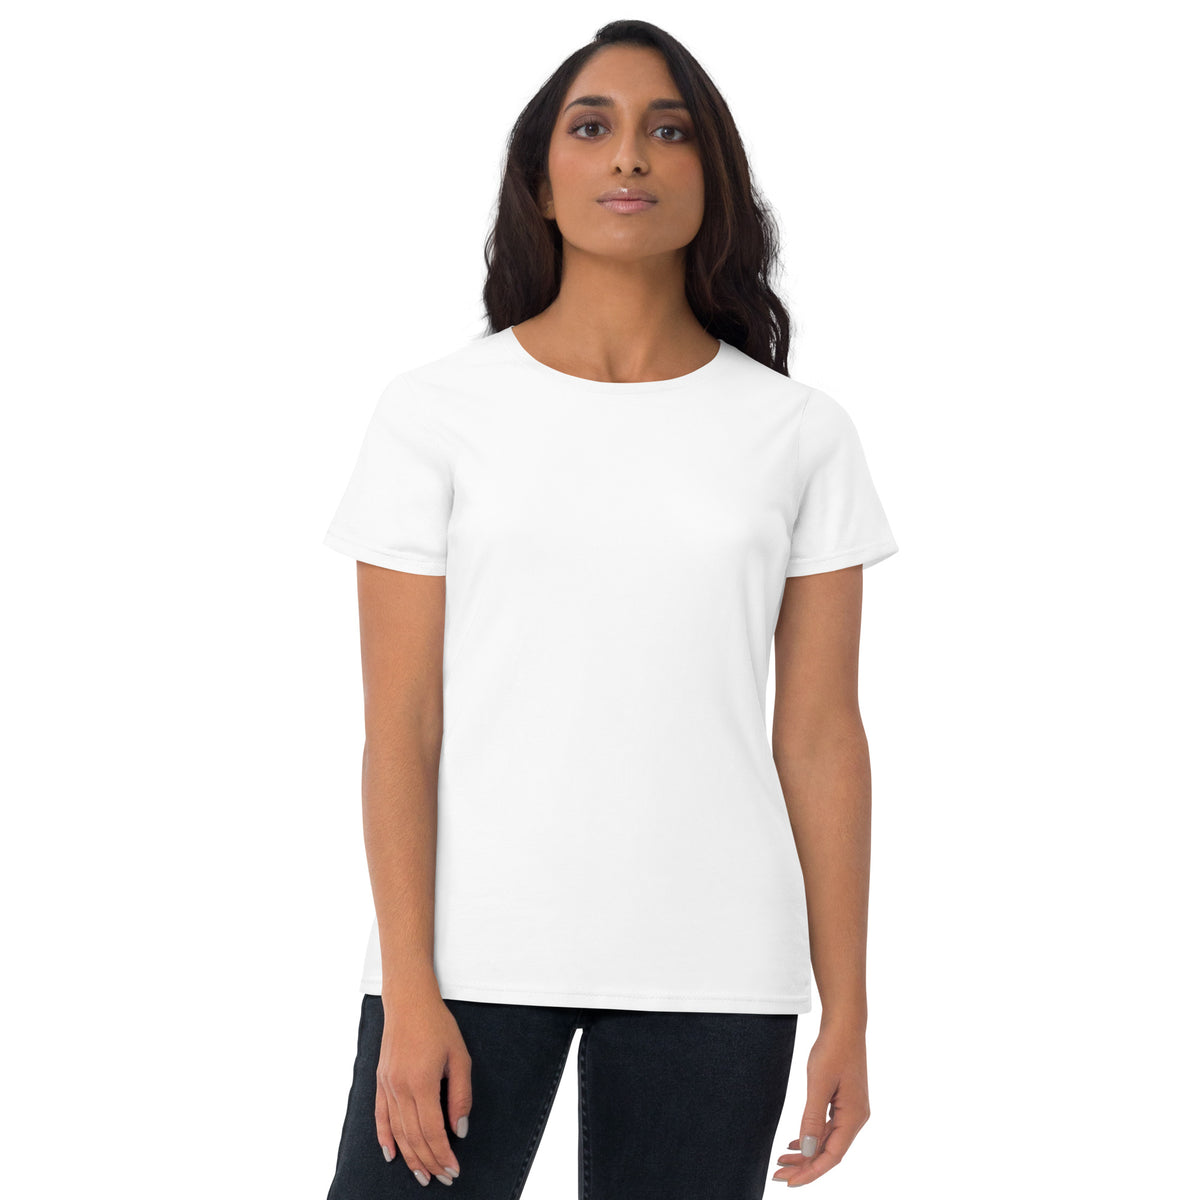 IDGAF-ish Women's Short Sleeve T-Shirt